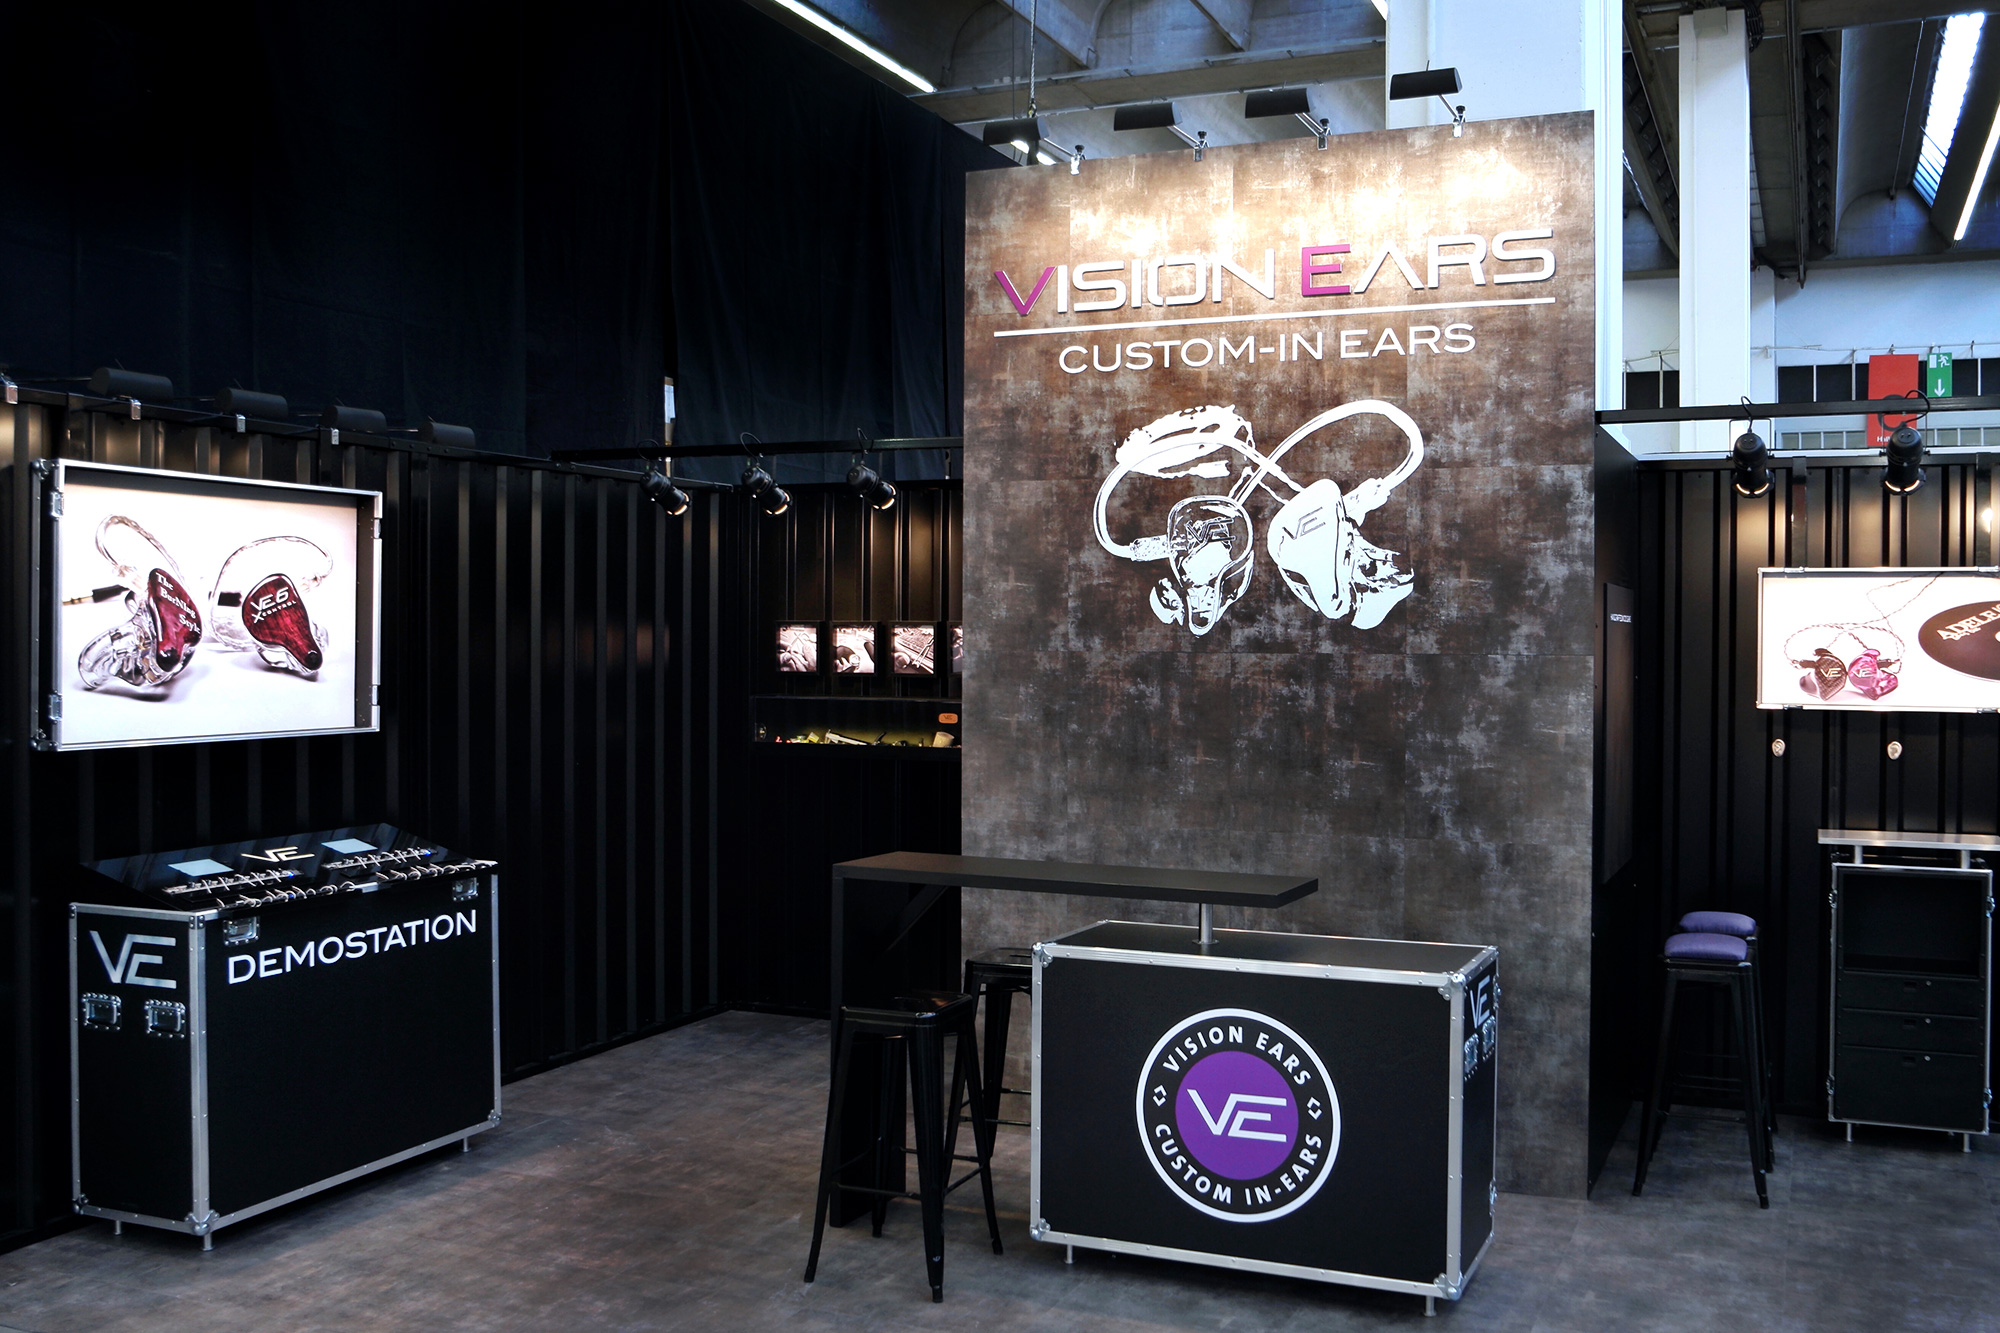 Vision Ears PLS 2015 Expo Booth Design StilManipulation